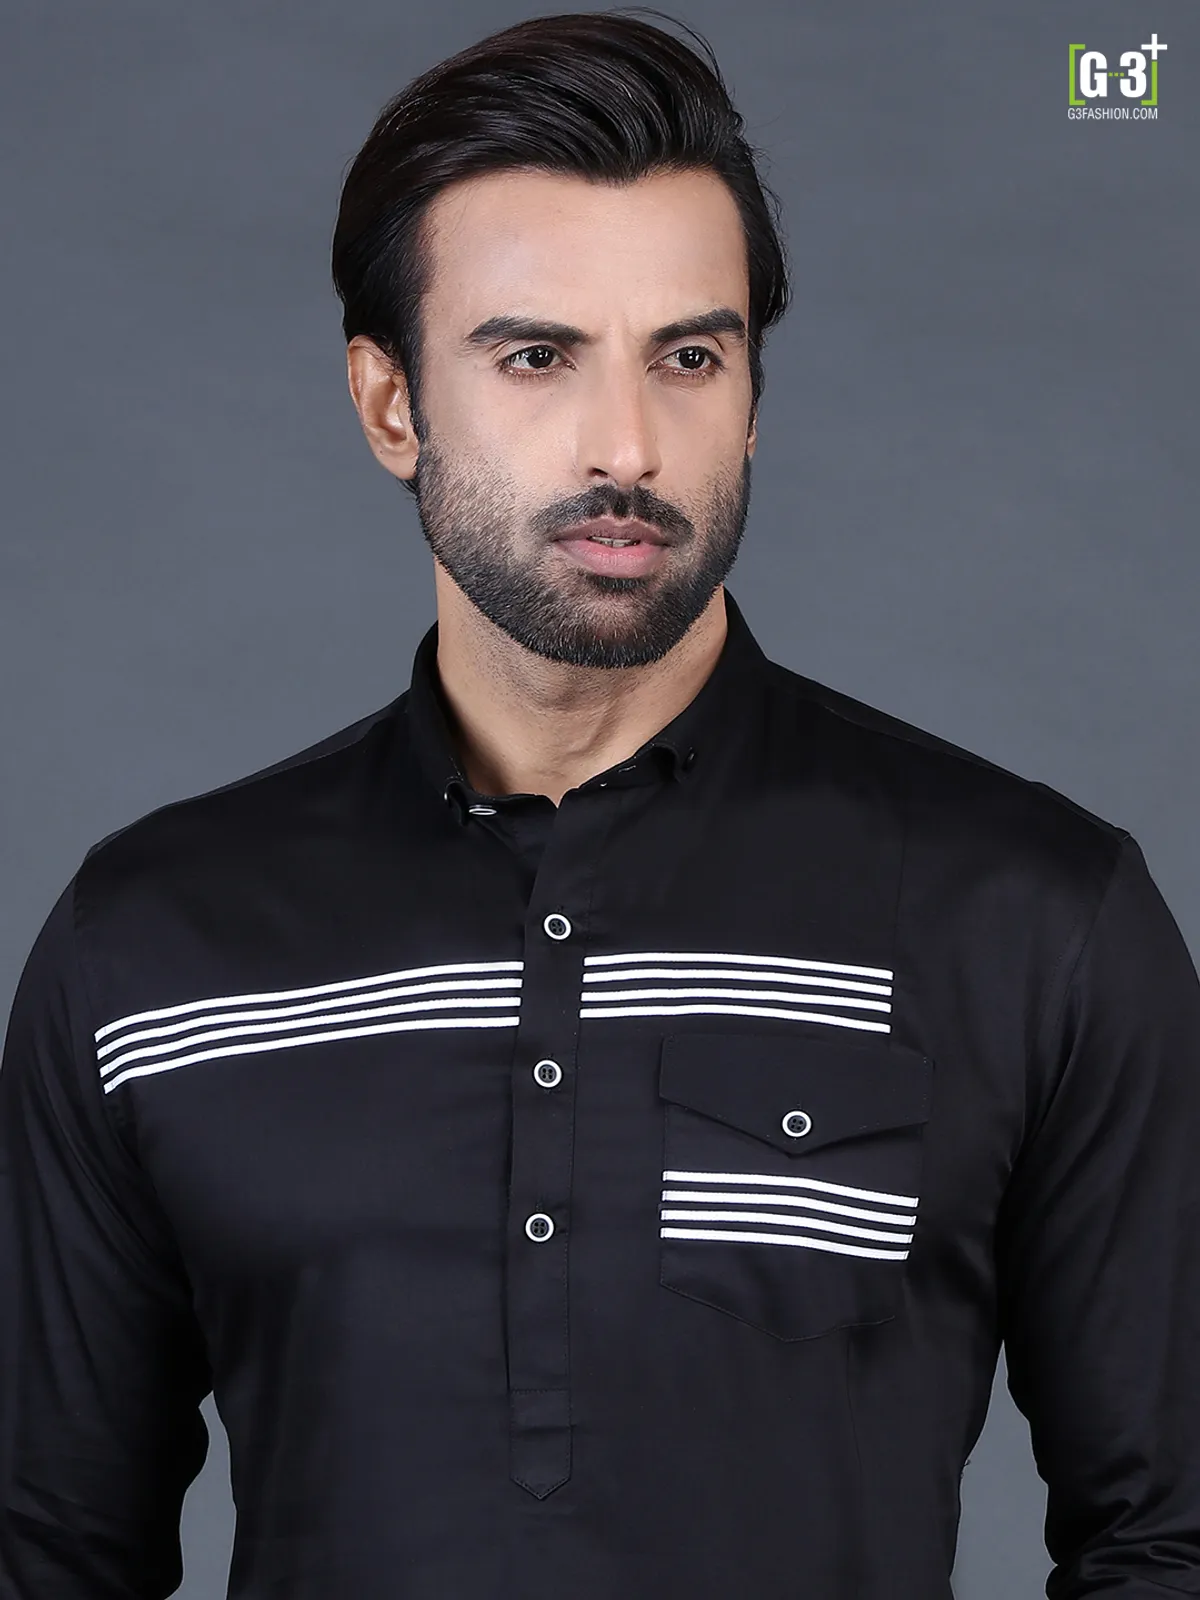 Black cotton solid mens pathani suit for festive